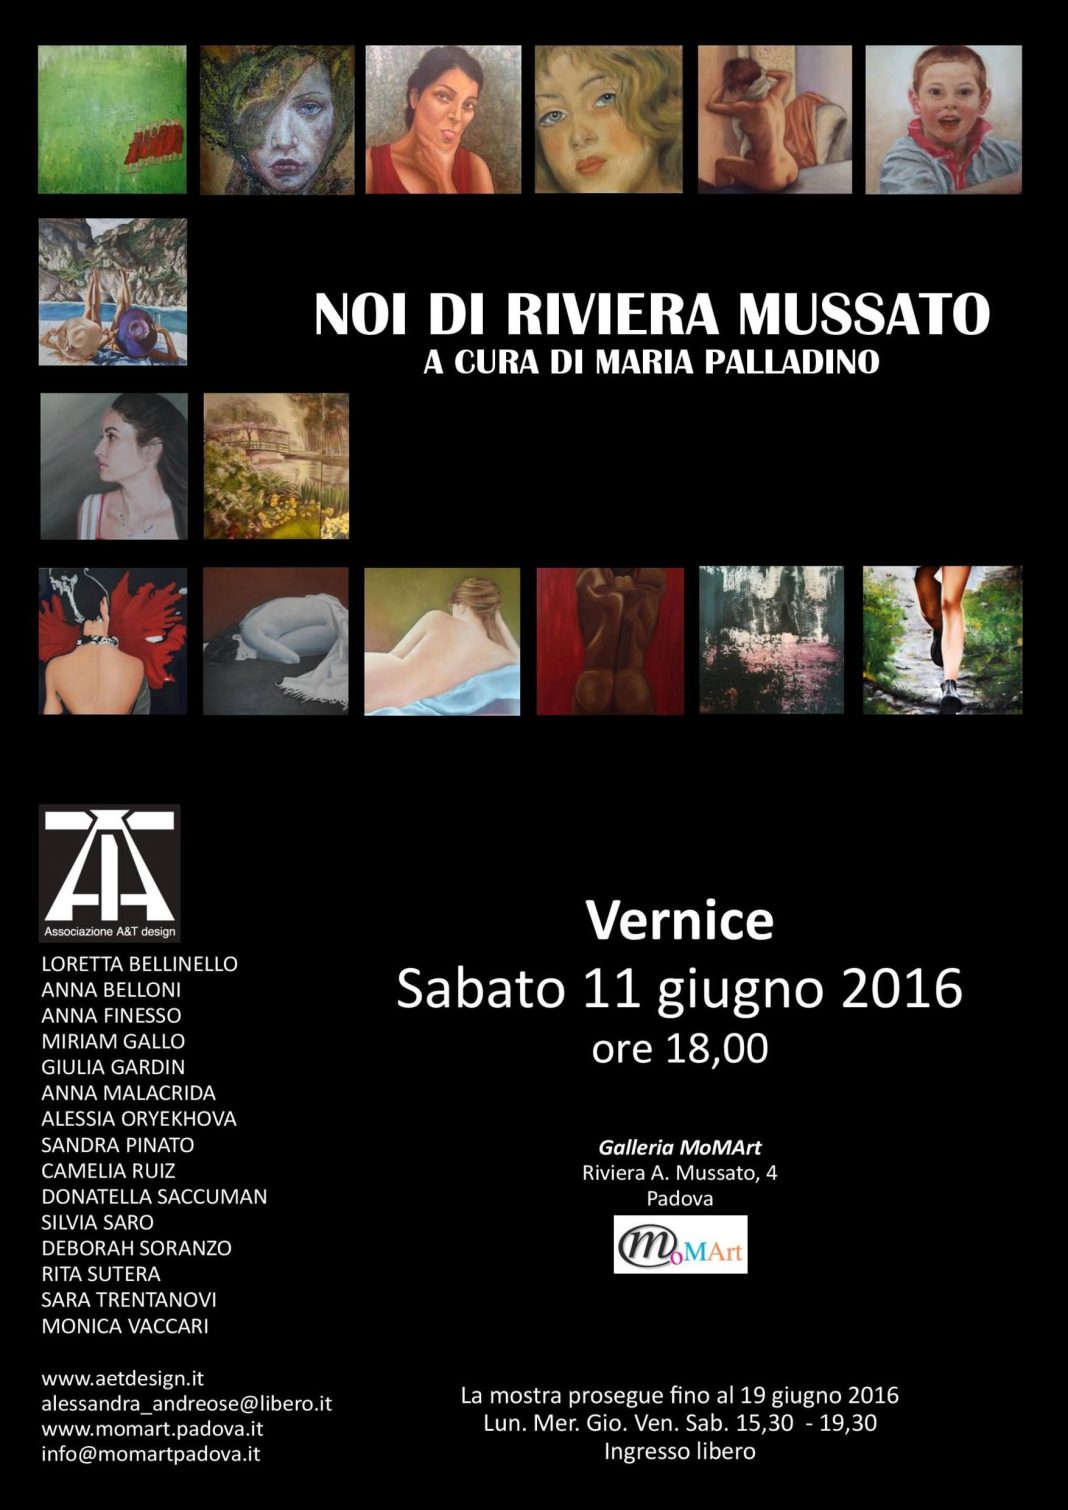 Noi di Riviera Mussatohttps://www.exibart.com/repository/media/eventi/2016/06/noi-di-riviera-mussato-1068x1510.jpg